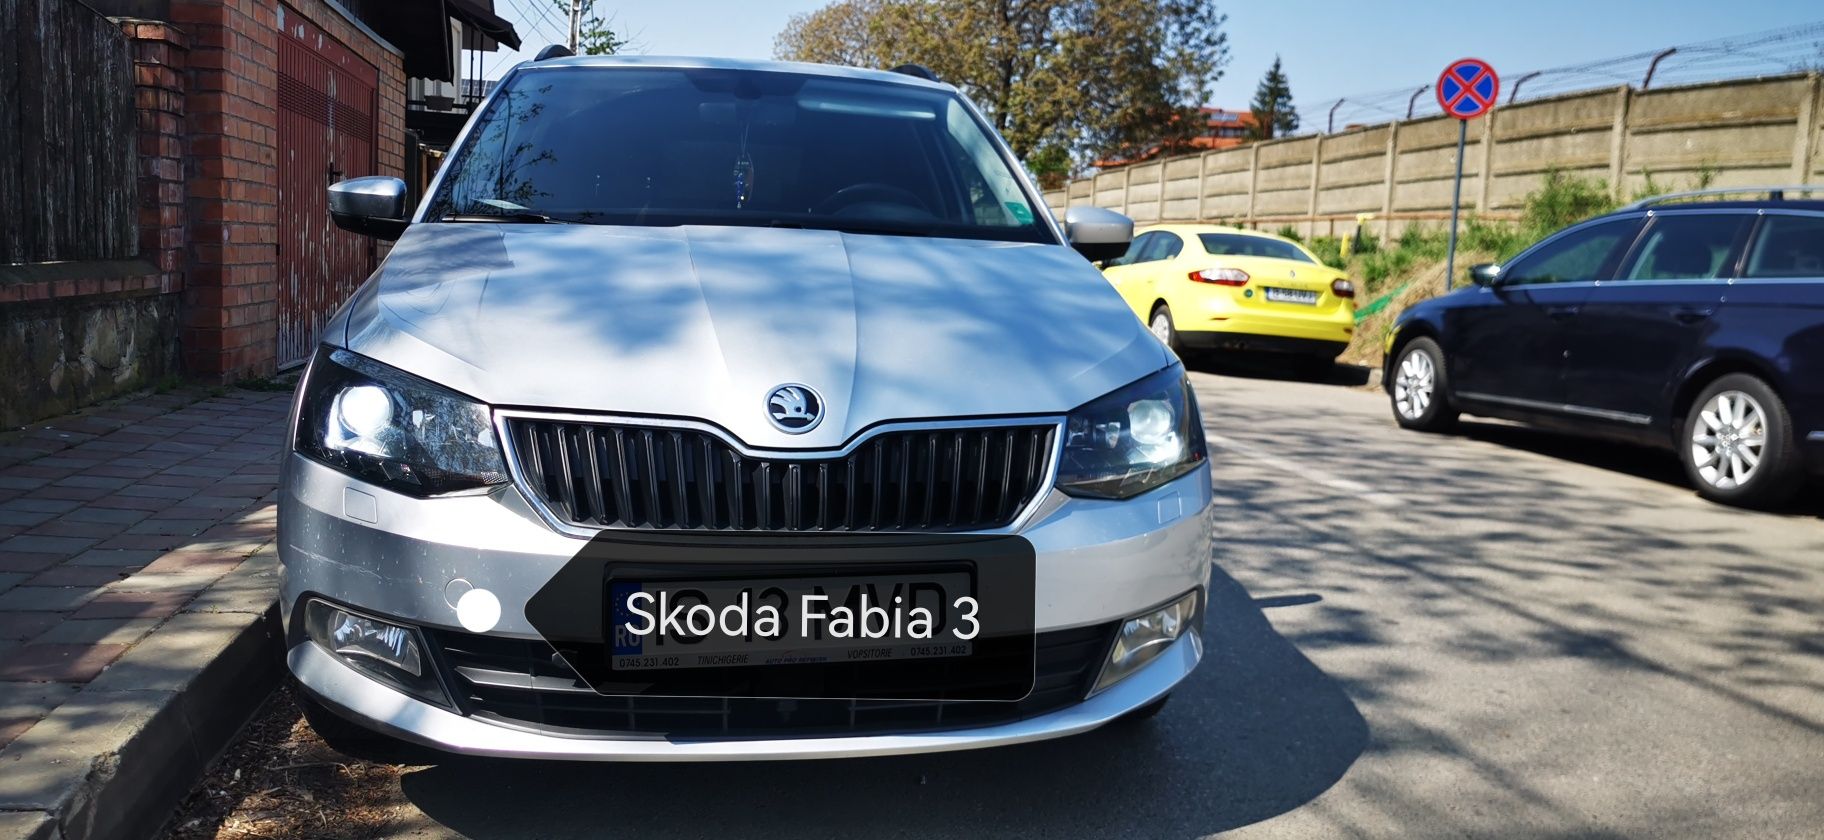 Skoda Fabia 3 1.4 TDI euro 6